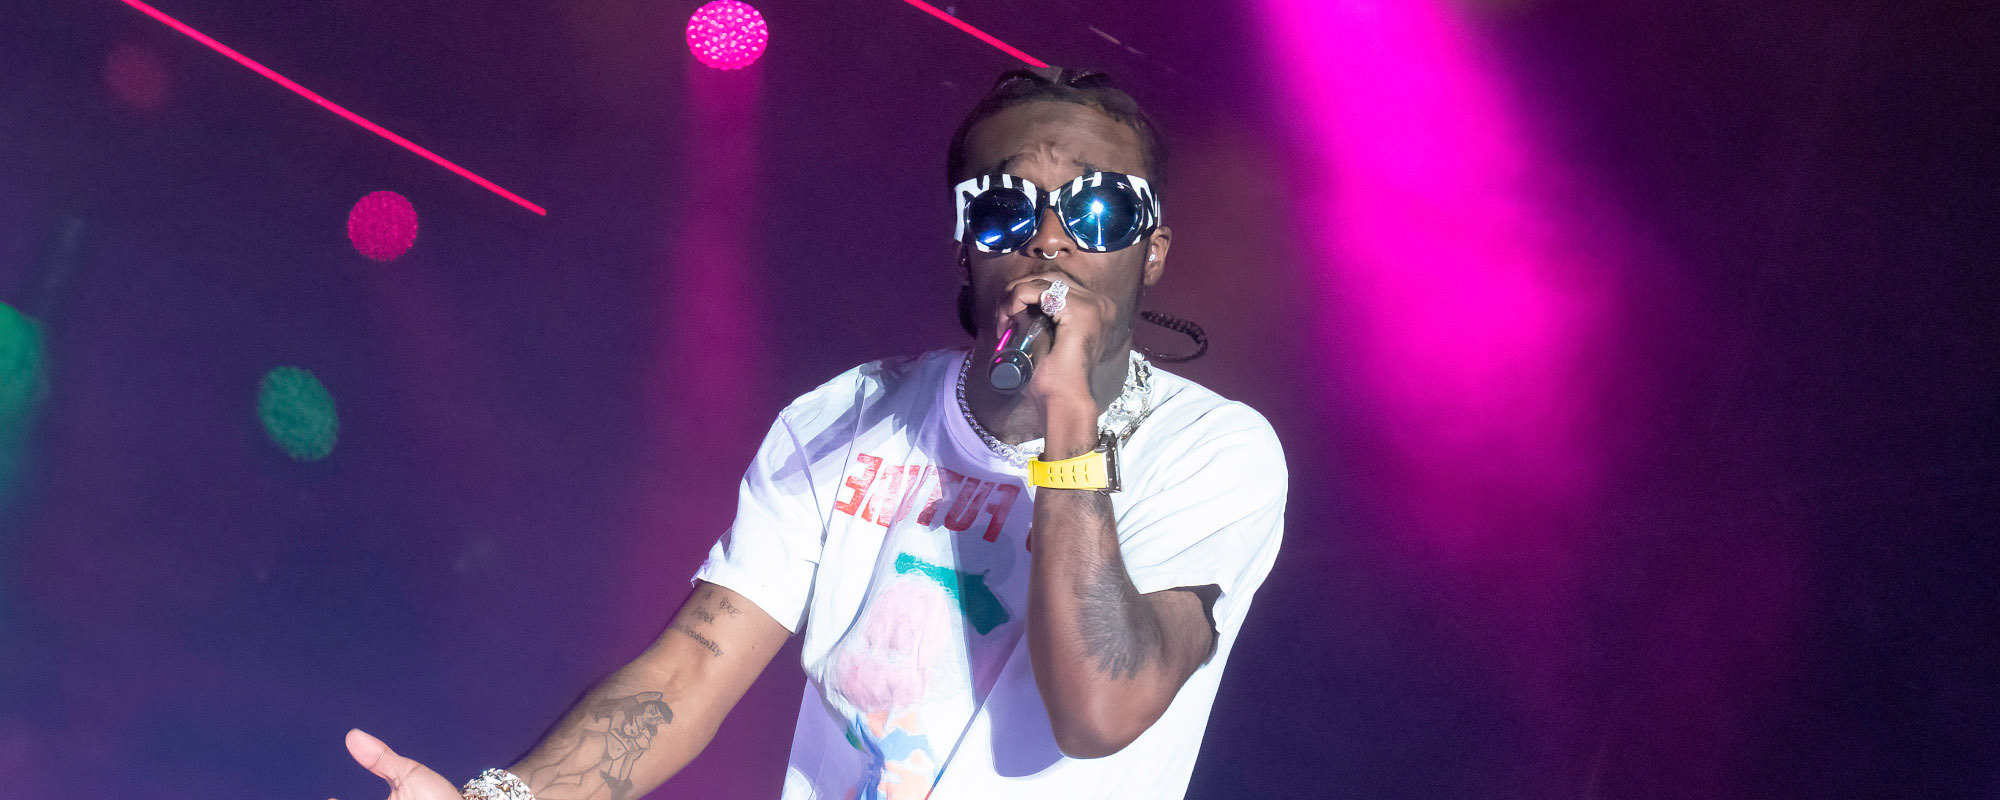 Lil Uzi Vert's New Album 'The Pink Tape' Release Date Announced – Billboard